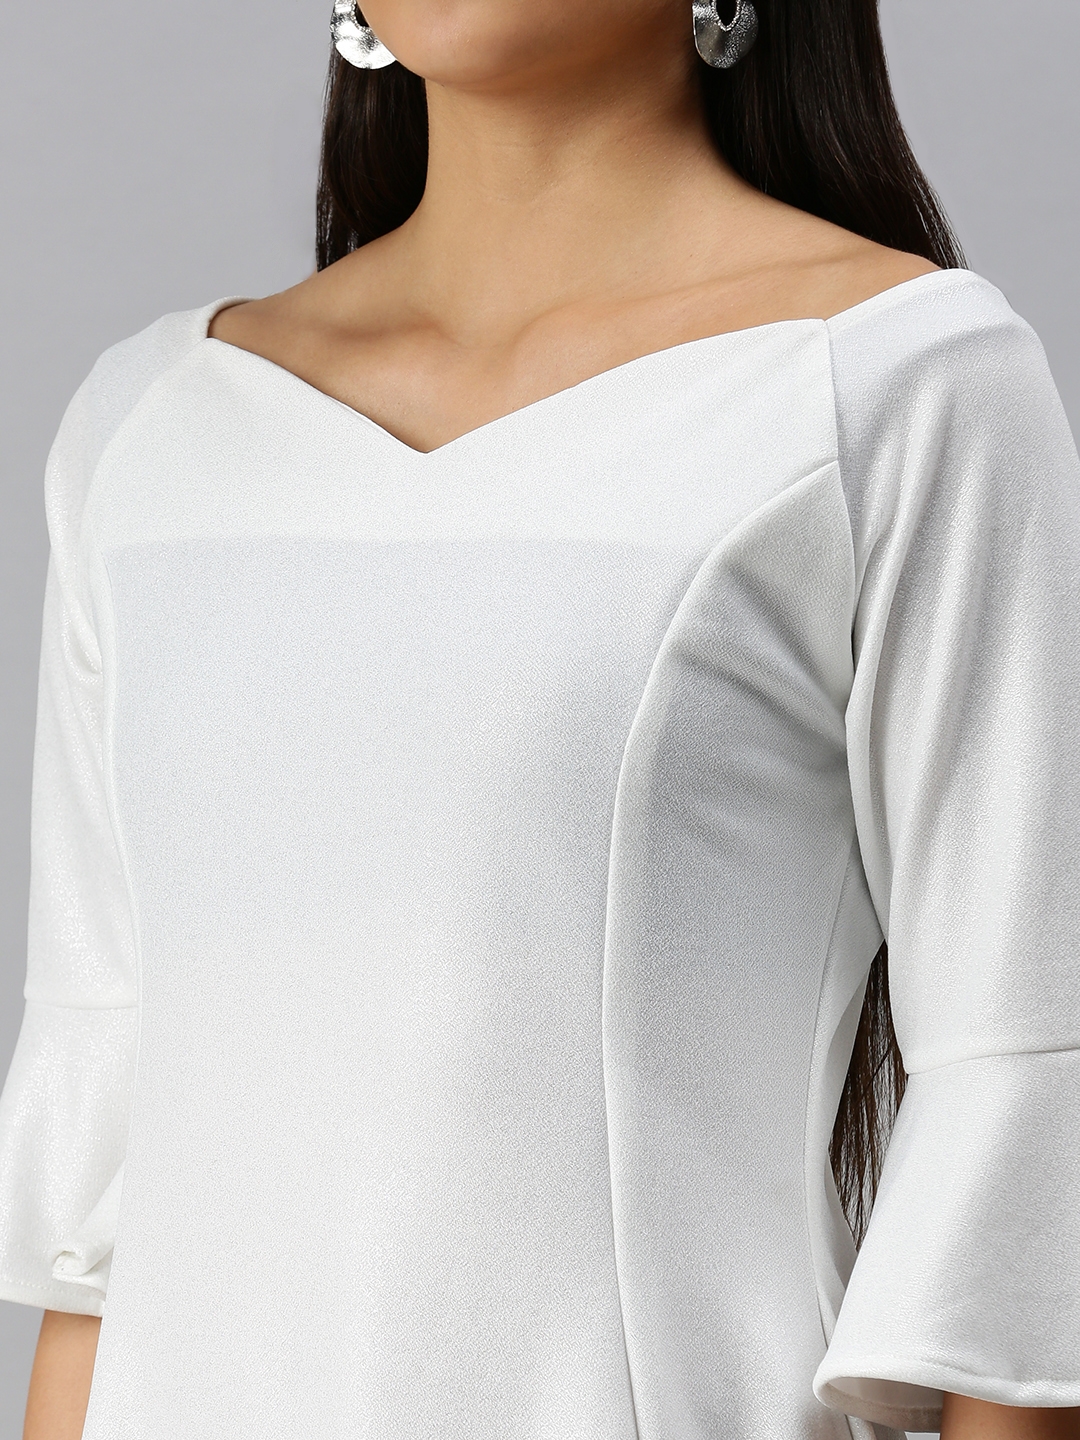 Showoff | SHOWOFF Women's Fit and Flare Off-Shoulder White Solid Dress 4